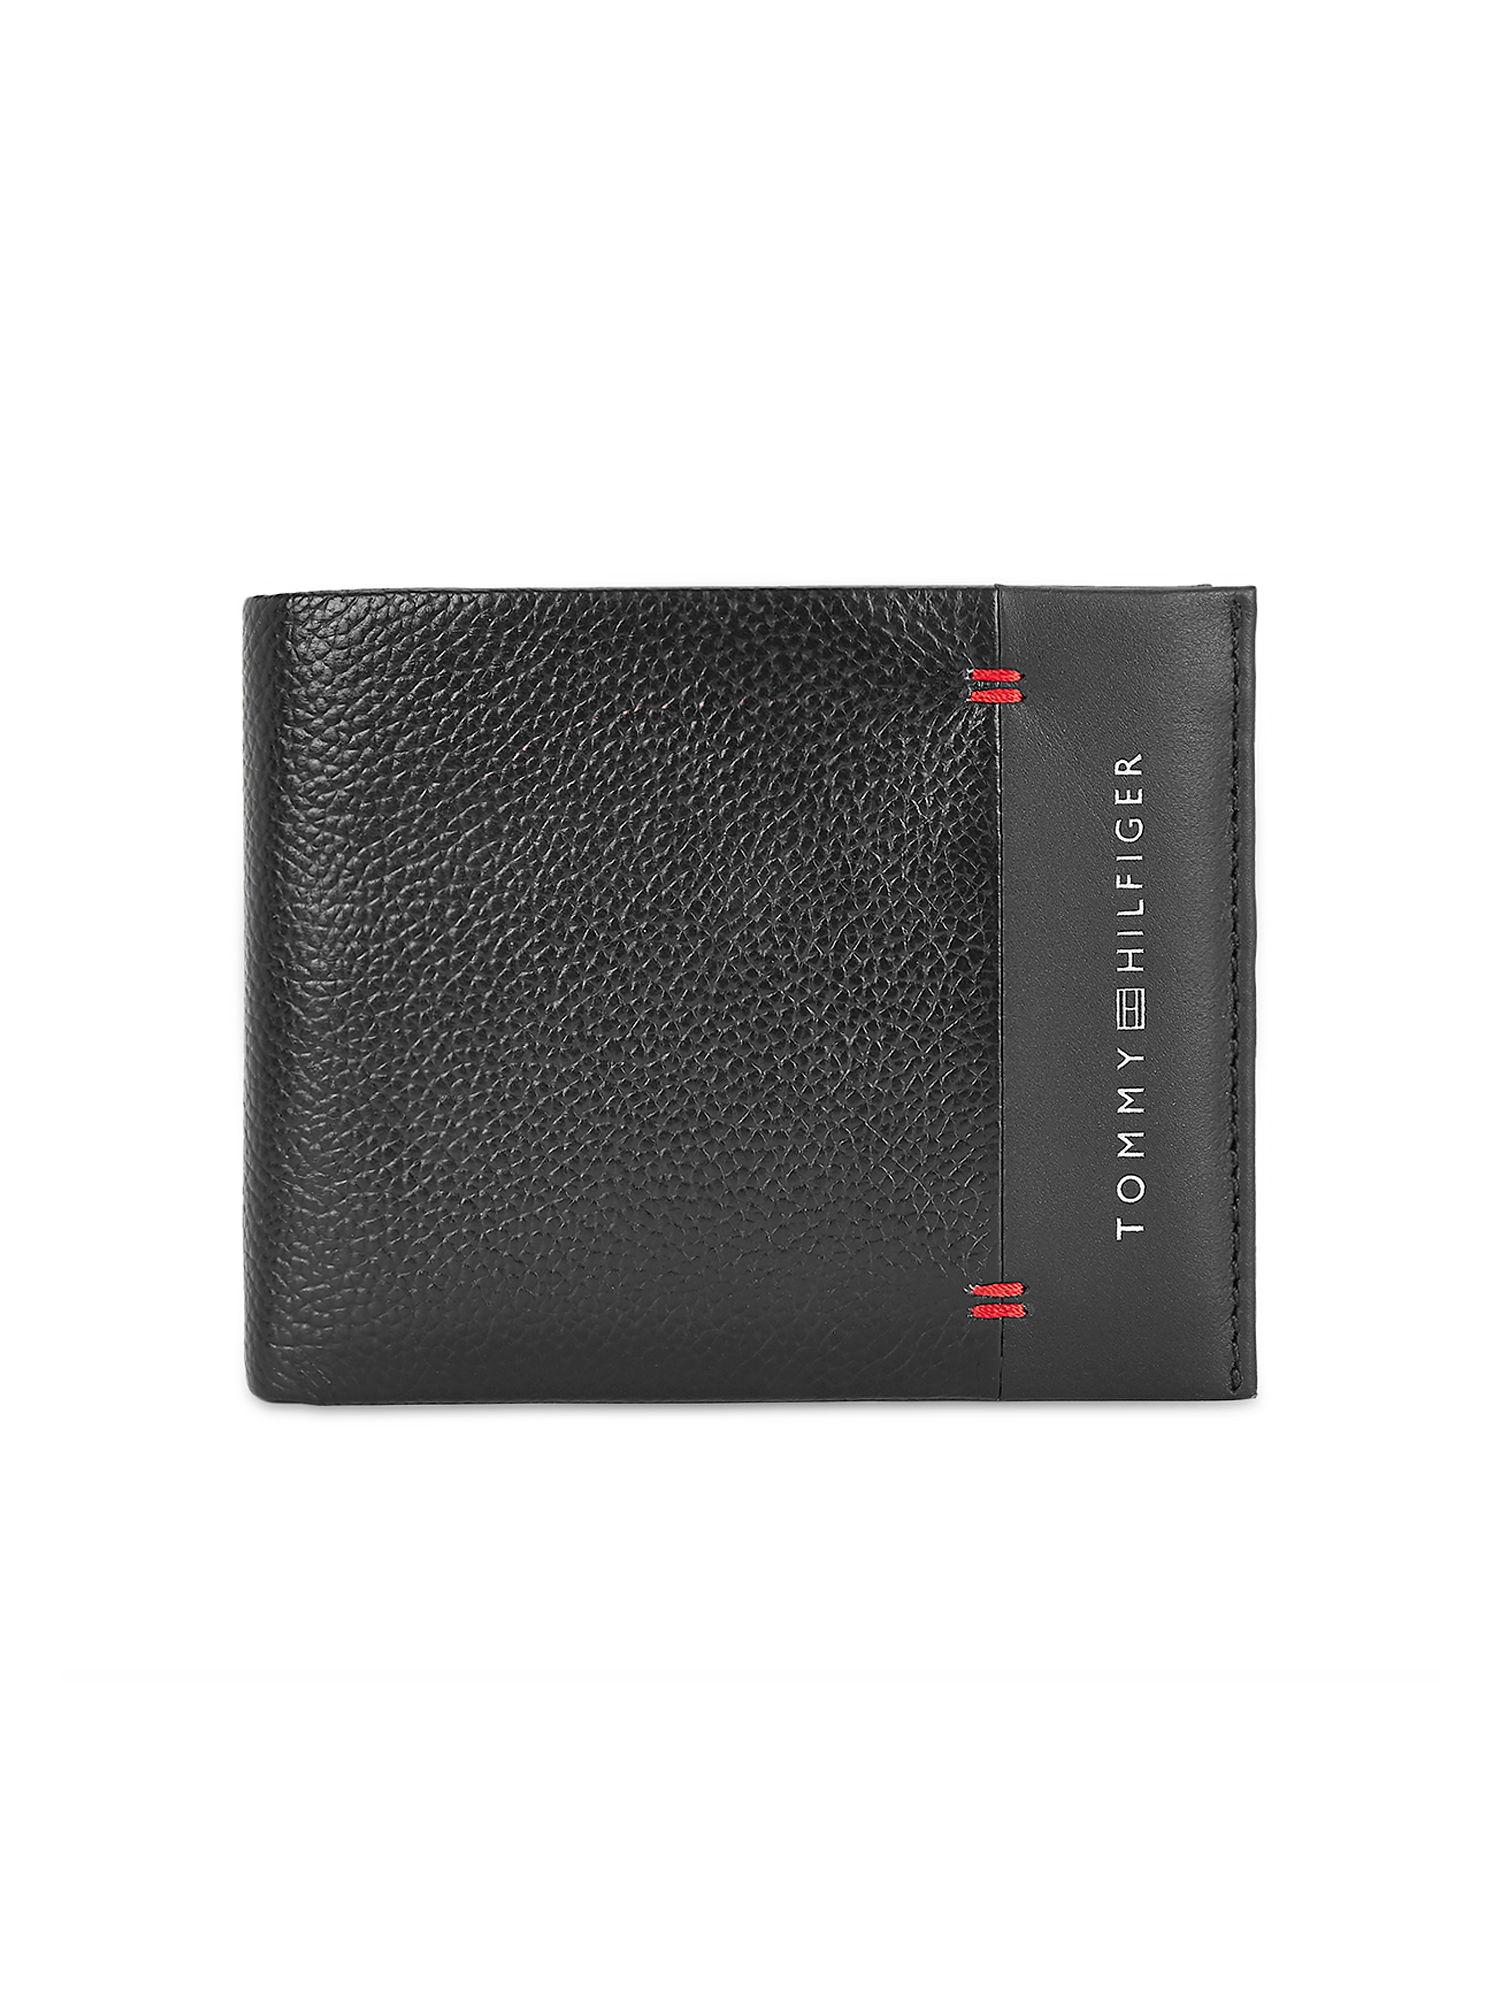 john mens leather wallet black